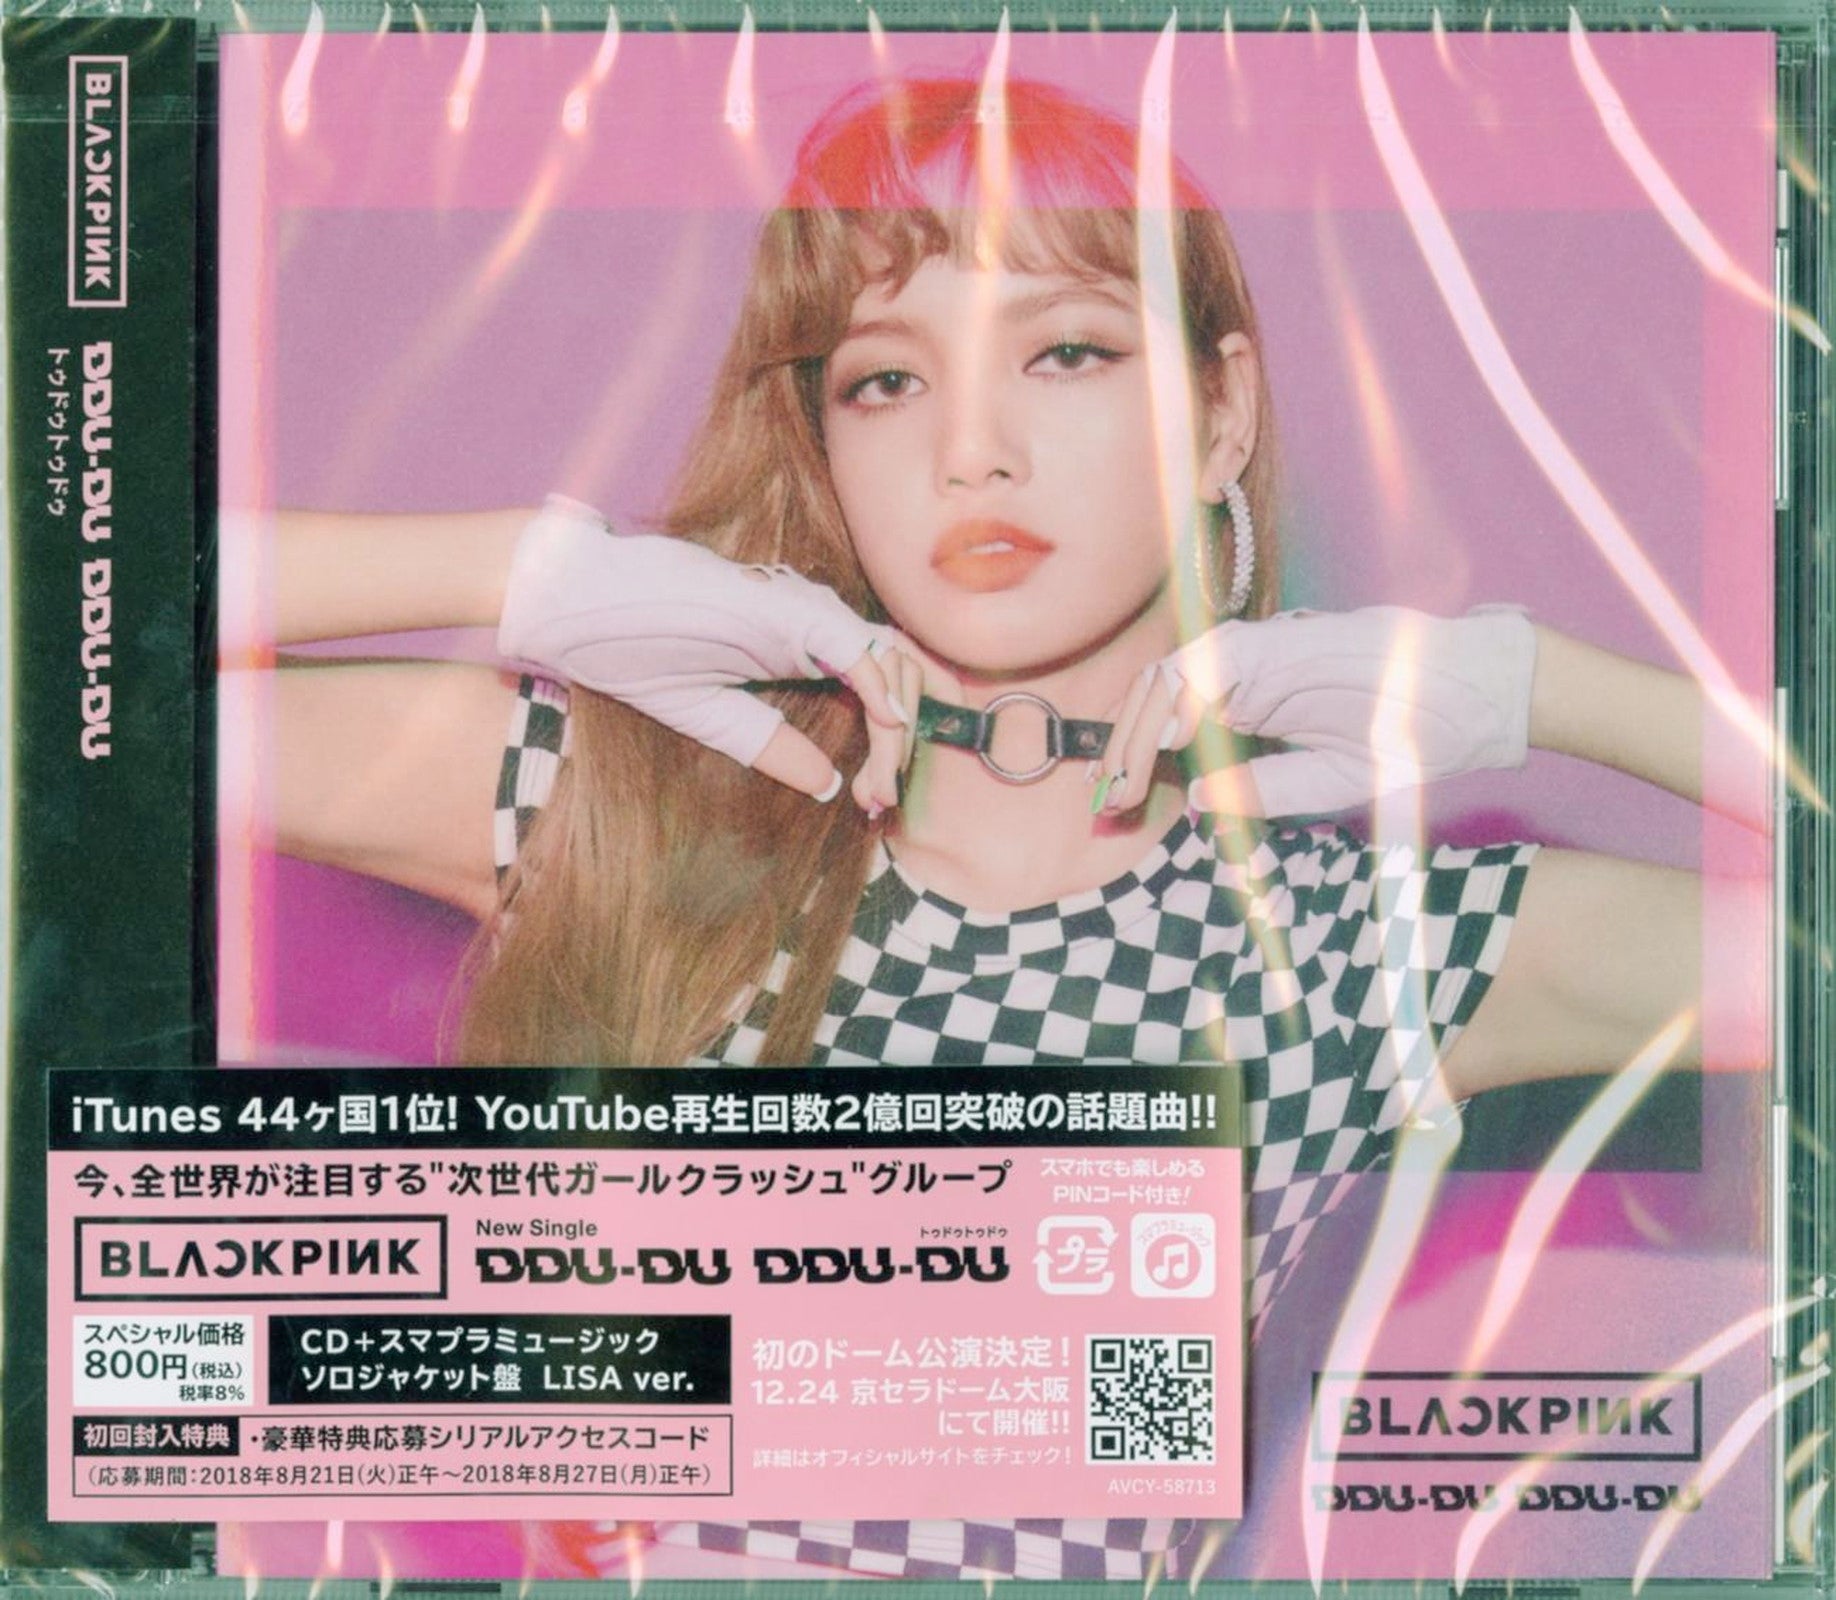 Blackpink - DDU-DU DDU-DU (Lisa Ver.) - Japan CD – CDs Vinyl Japan Store